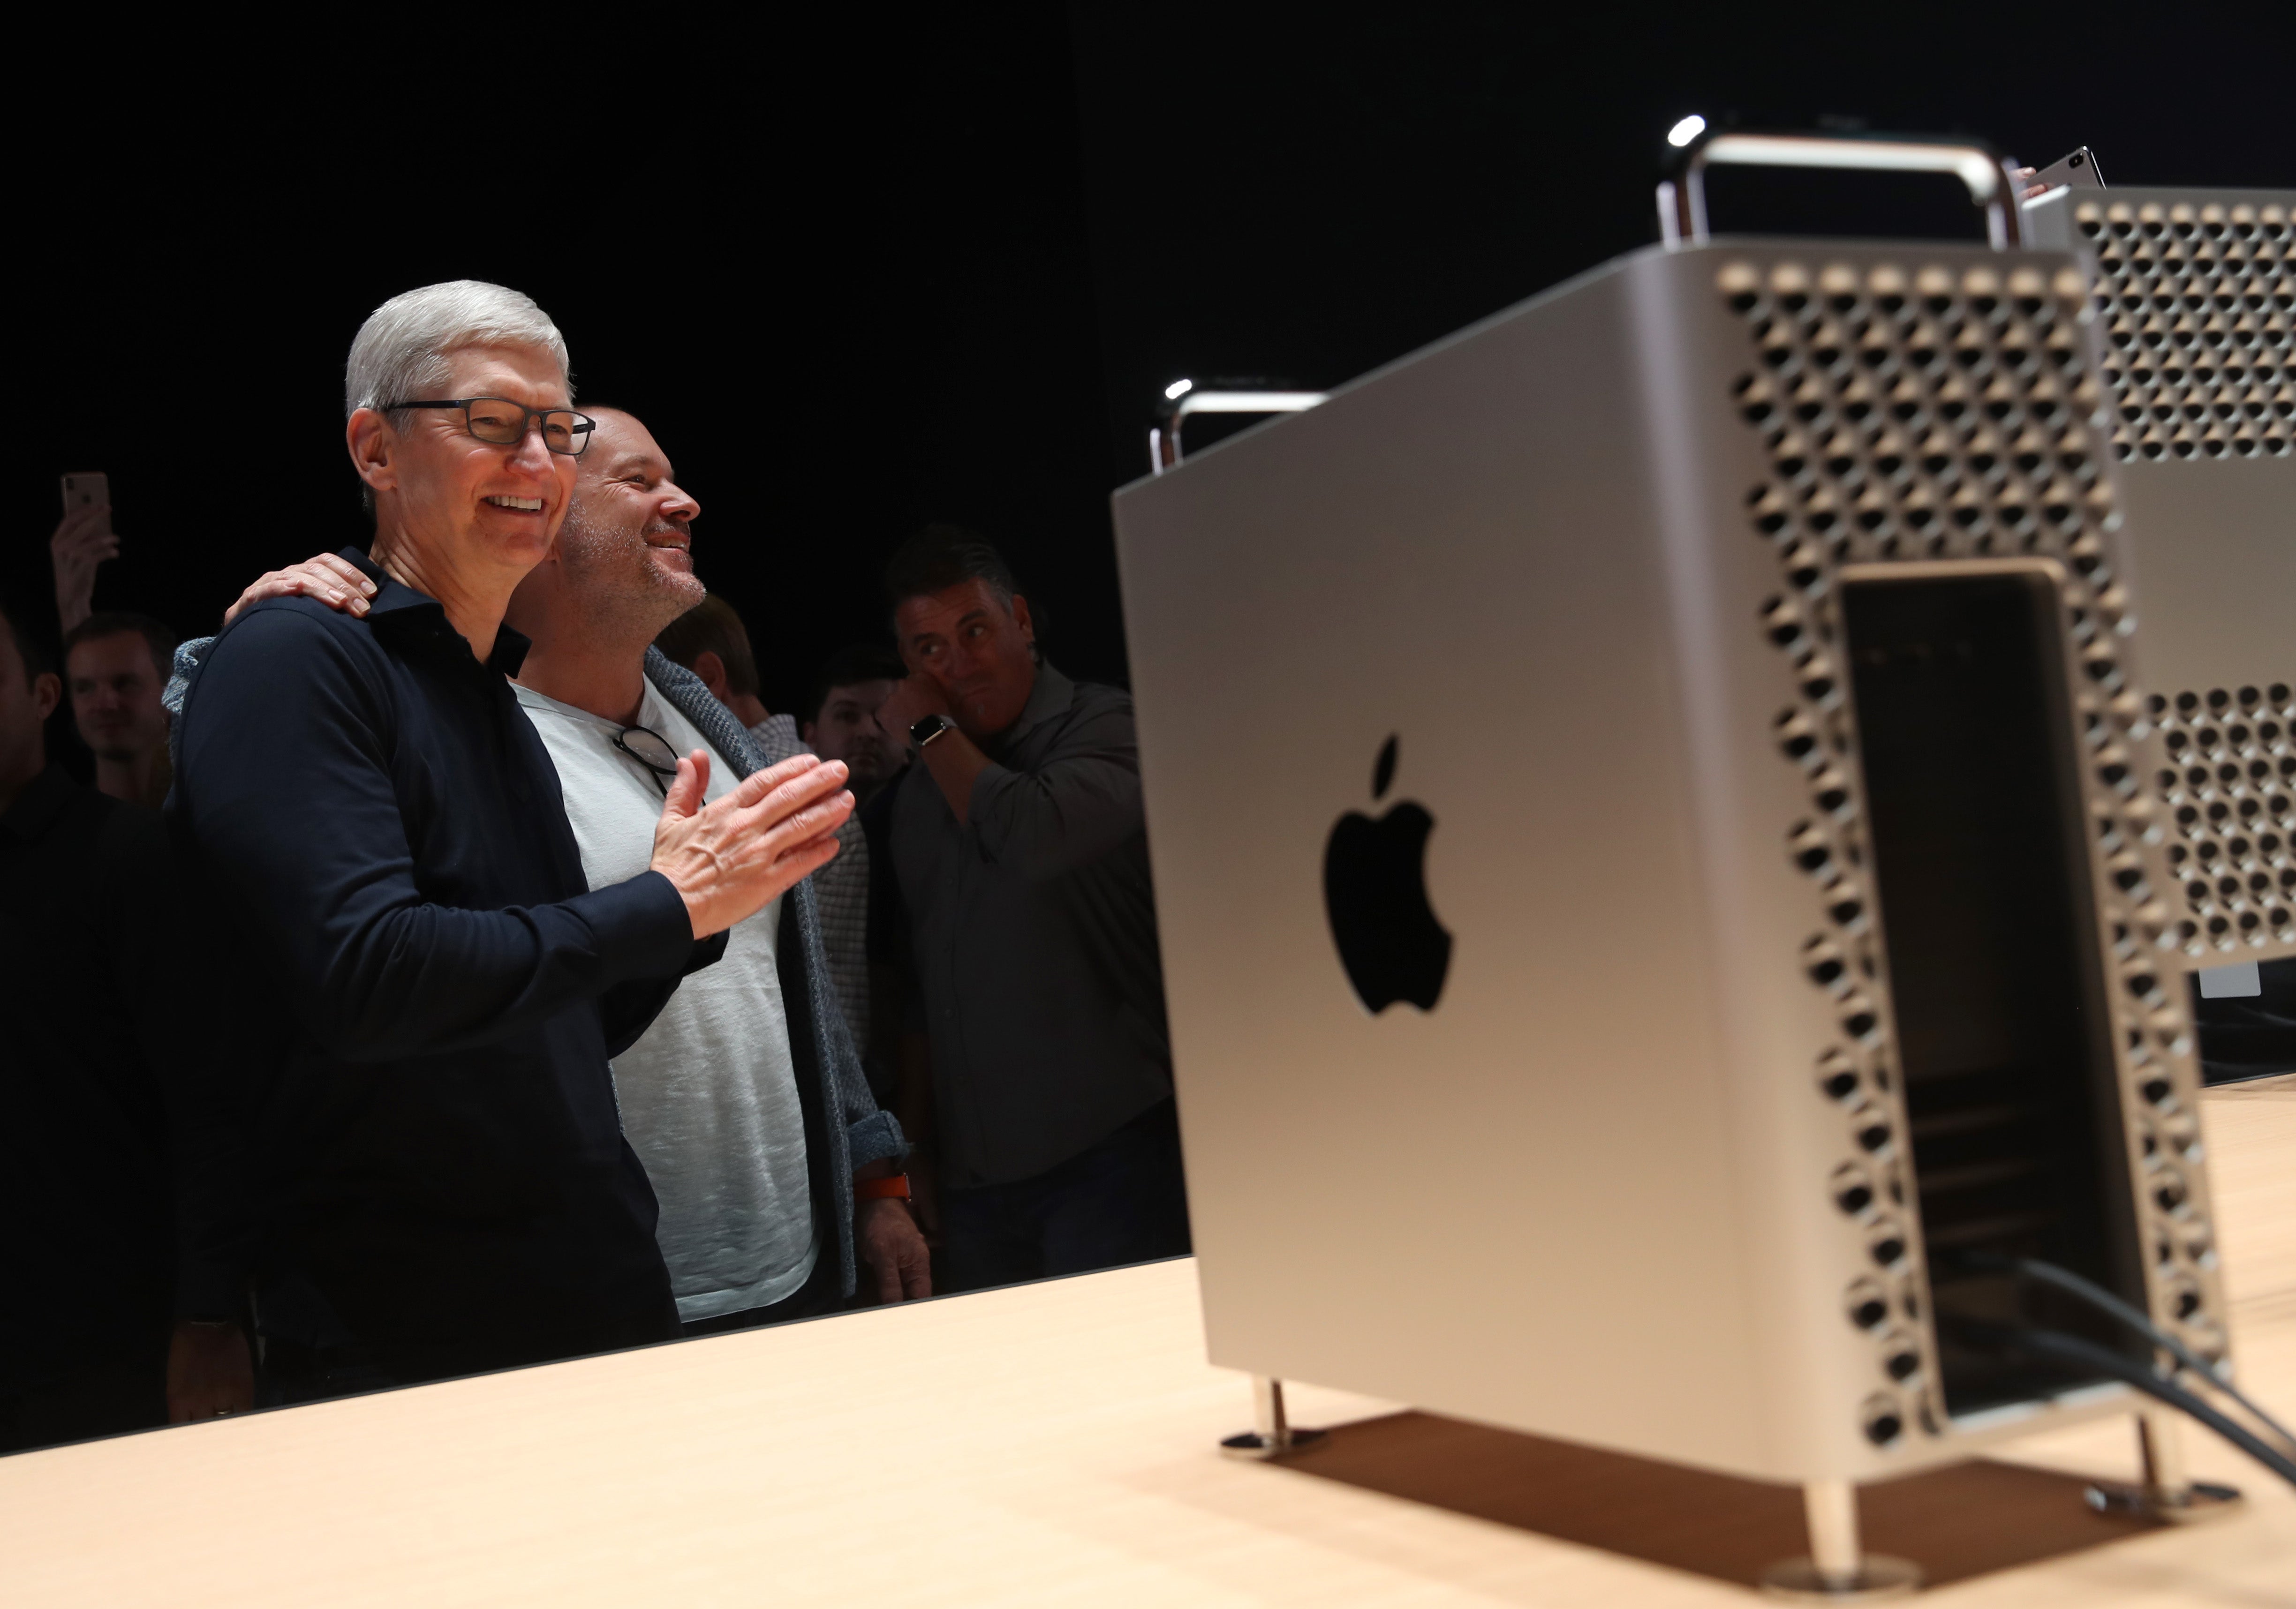 Jony Ive with Steve Jobs